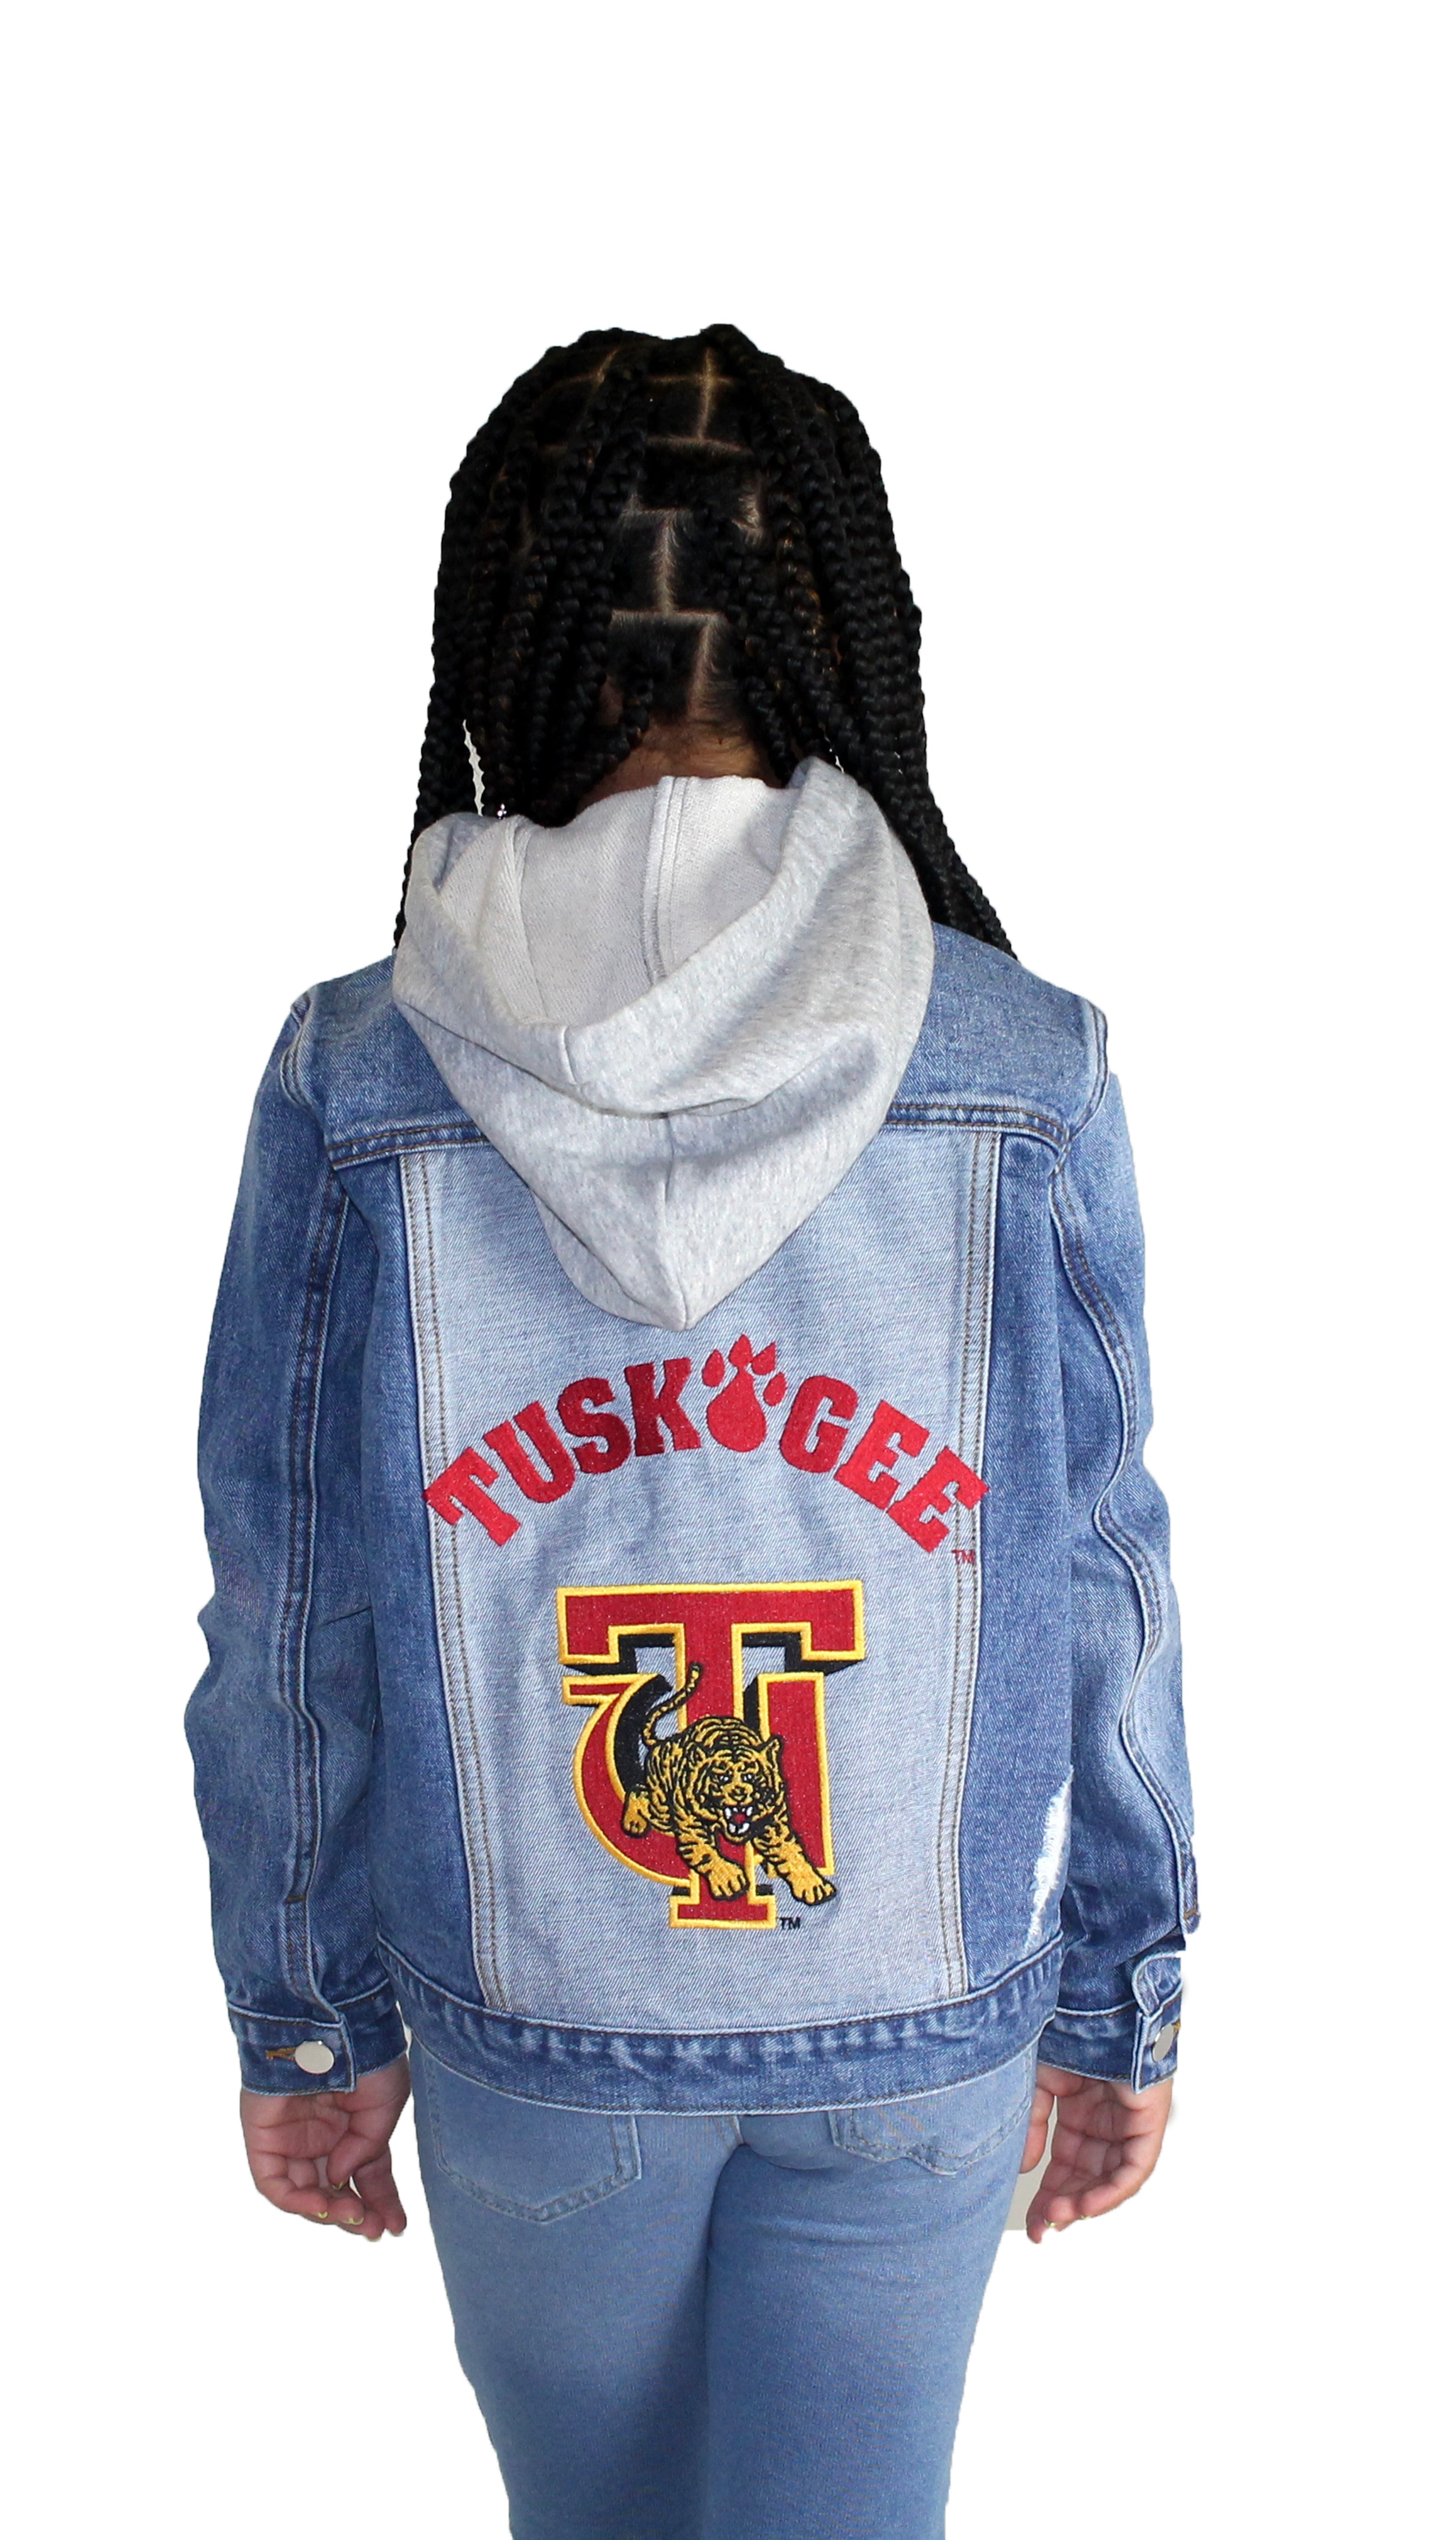 Tuskegee Tigers Youth Denim Jacket